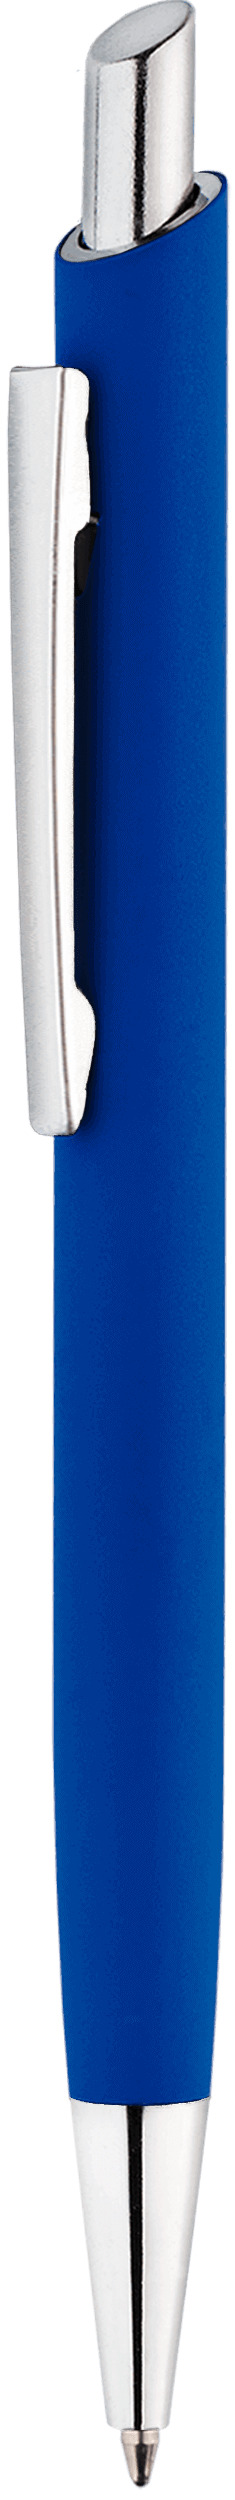 Ручка ELFARO SOFT, синяя